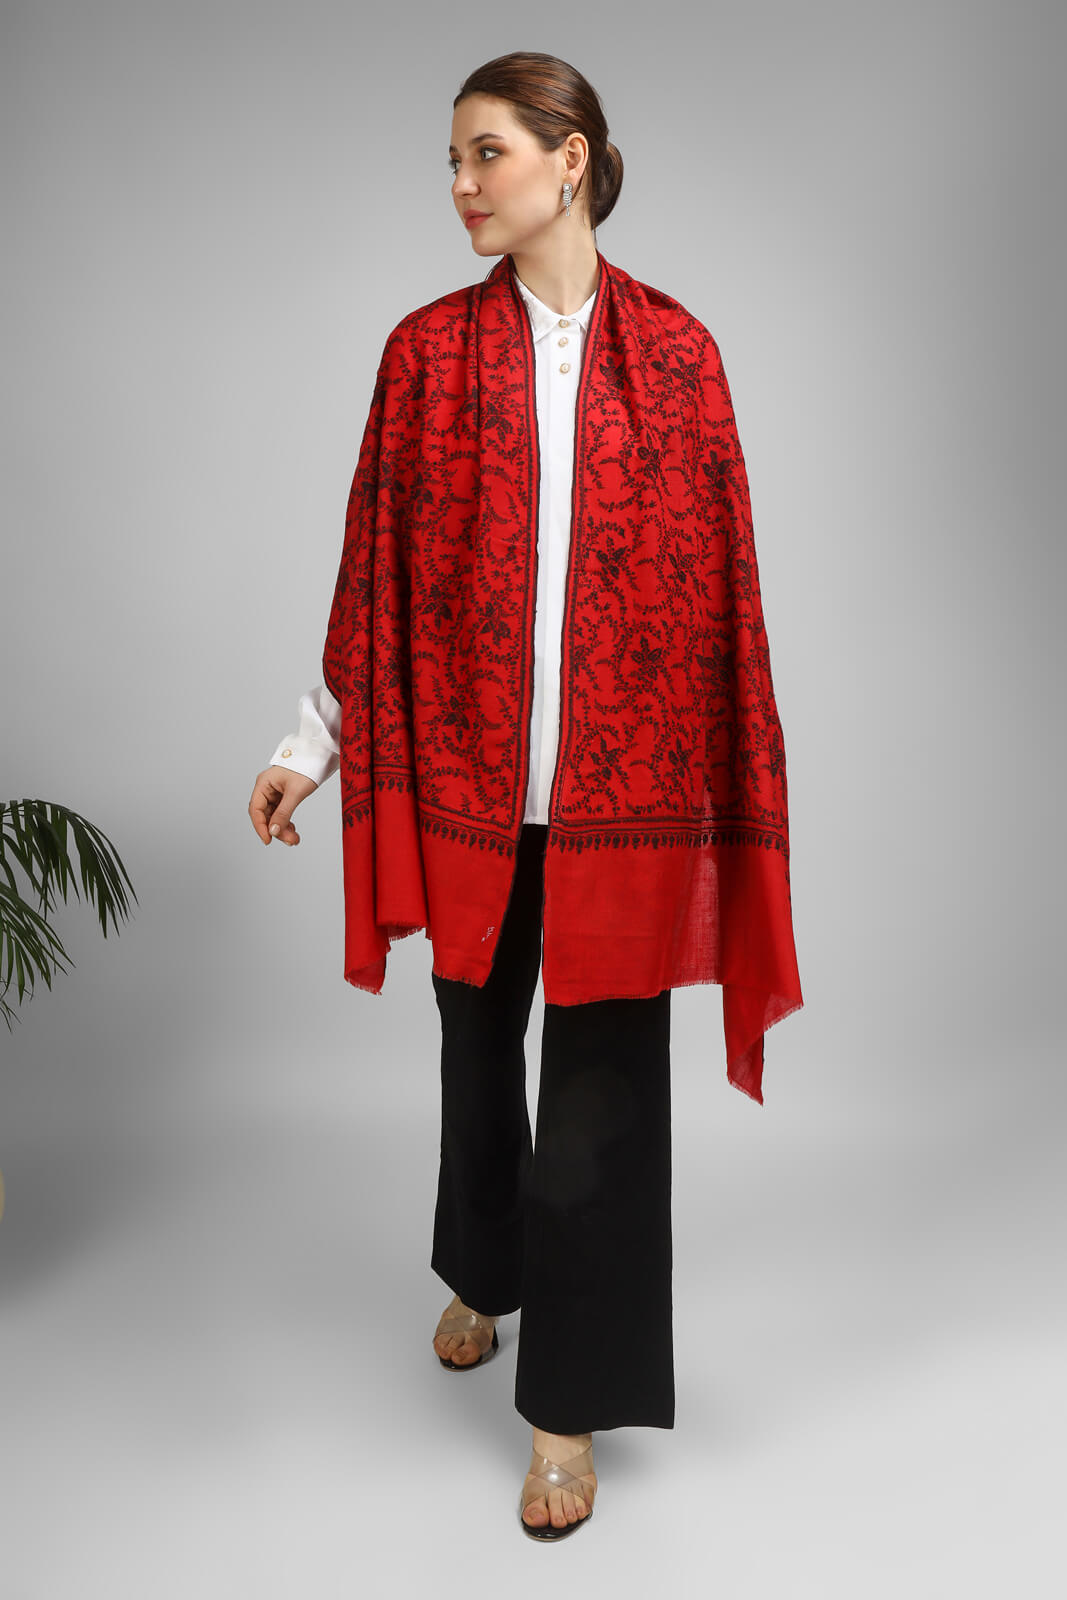 PASHMINA EMBROIDERY STOLE - Red Pashmina Jaldaar stole, boasting intricate black Sozni embroidery - We deliver to United States, China, Japan, Germany, United Kingdom, France, Canada, South Korea, Australia, and Switzerland.